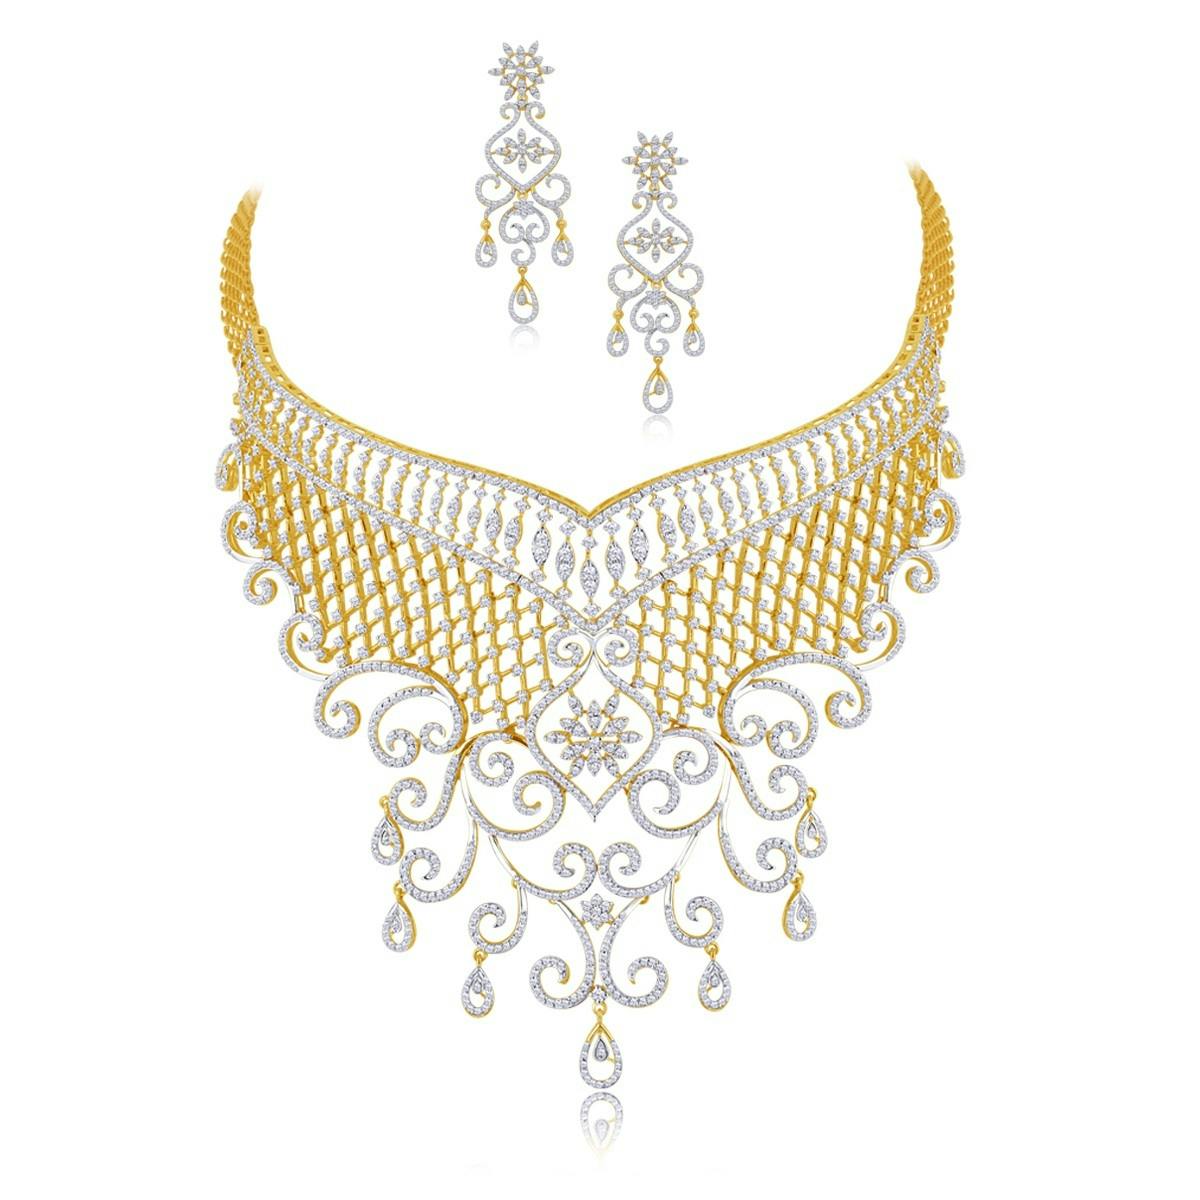 Splendid Sparkle necklace set